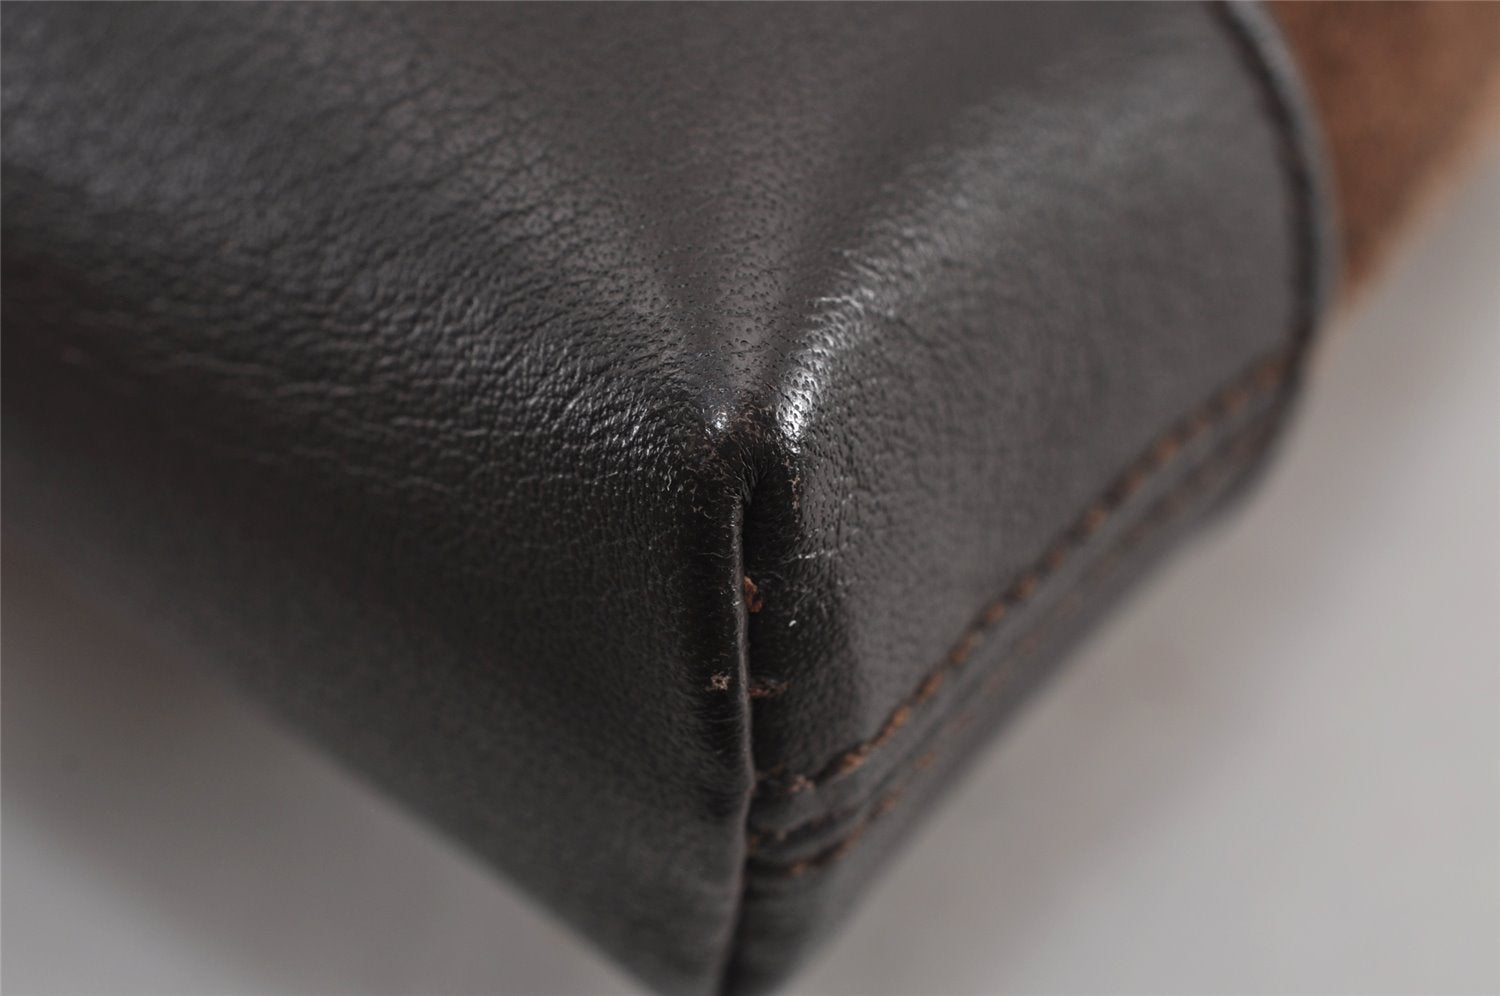 Authentic LOEWE Anagram Shoulder Cross Bag Purse Suede Leather Brown 8962J